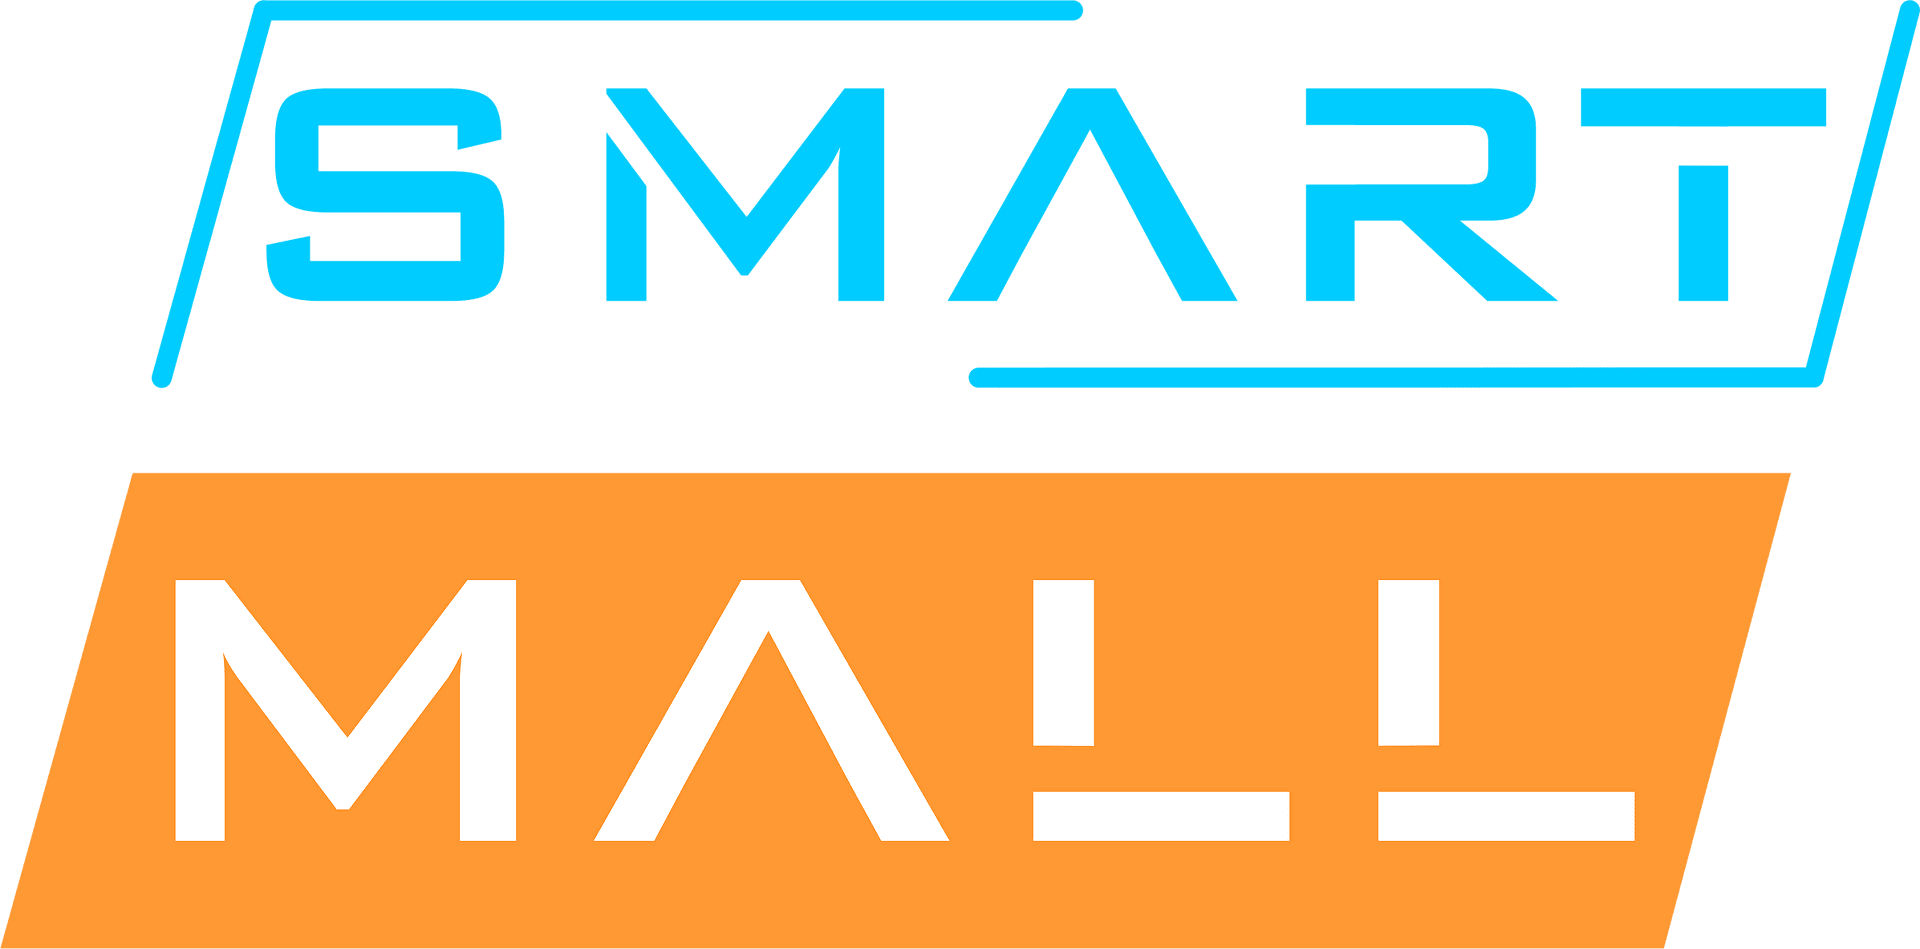 Smartmall.bg